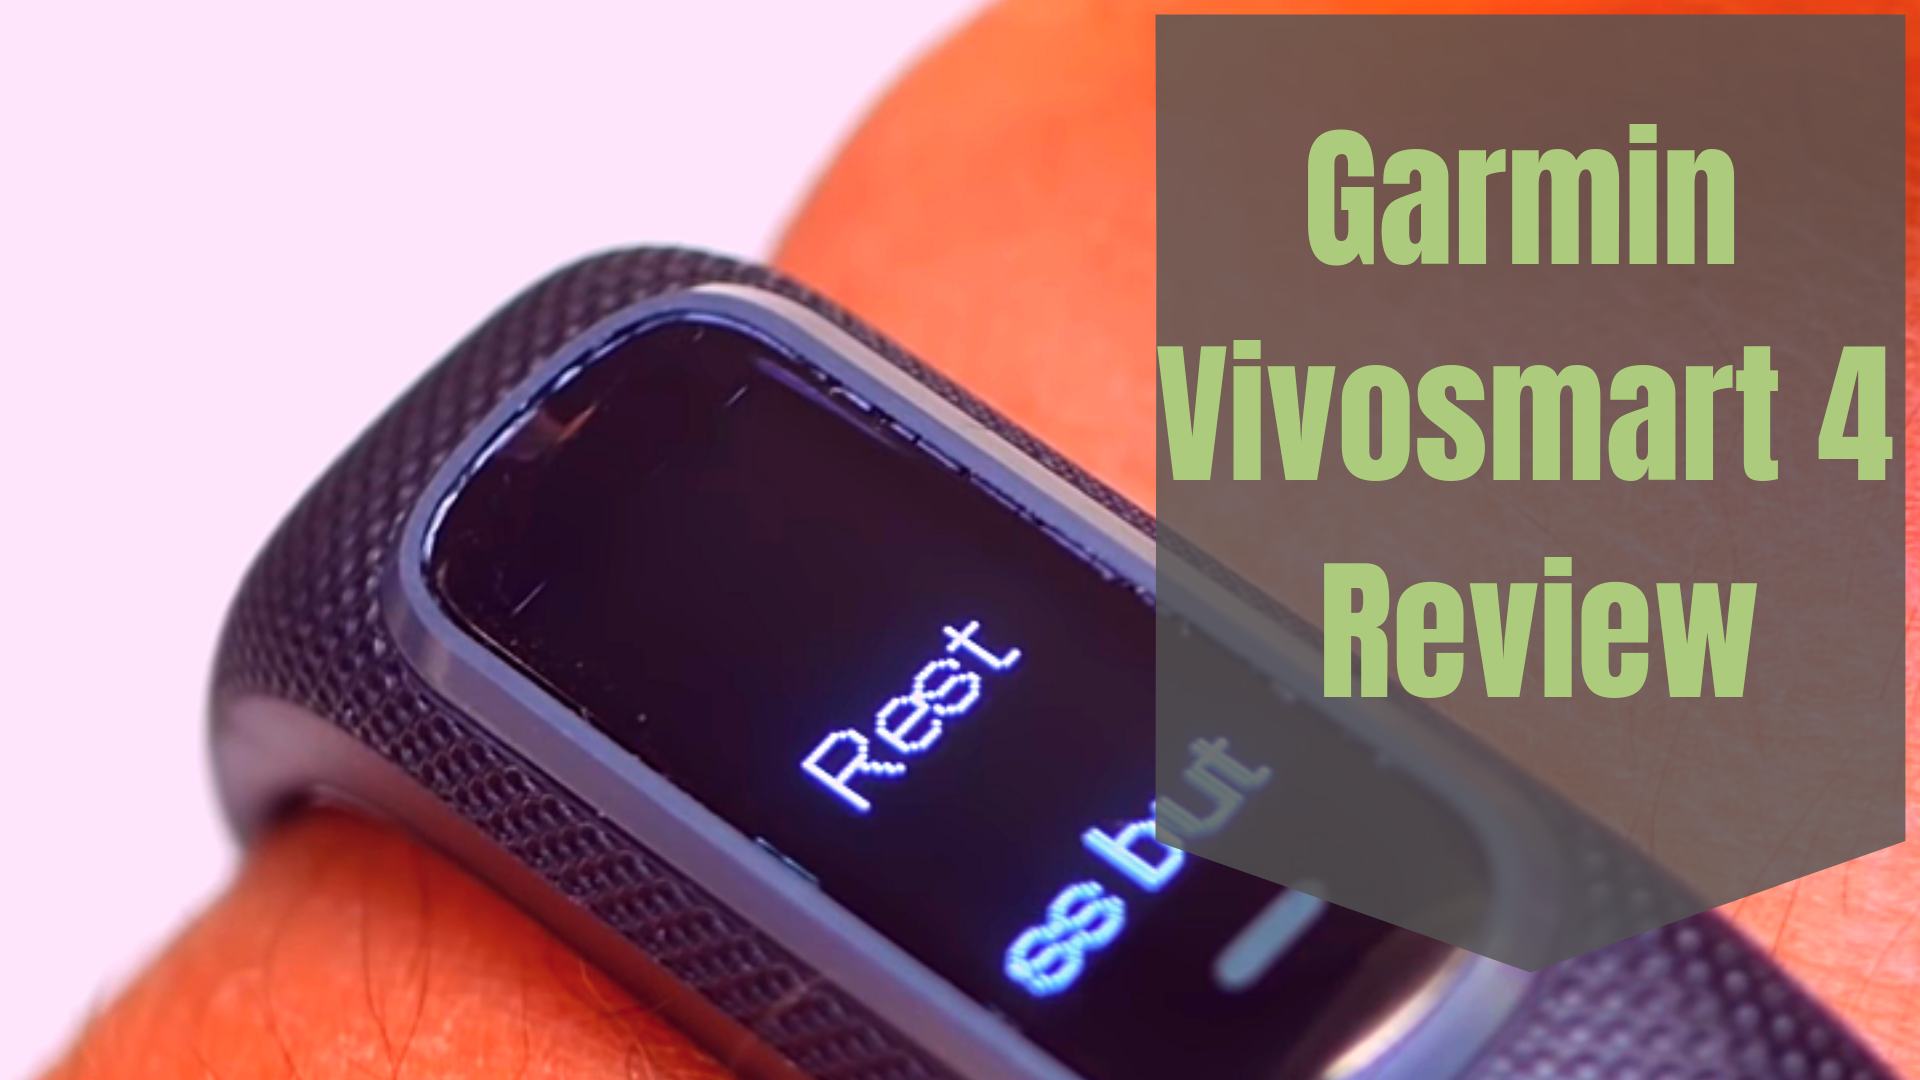 Garmin Vivosmart 4 Review; I'm just doing what we're told 9